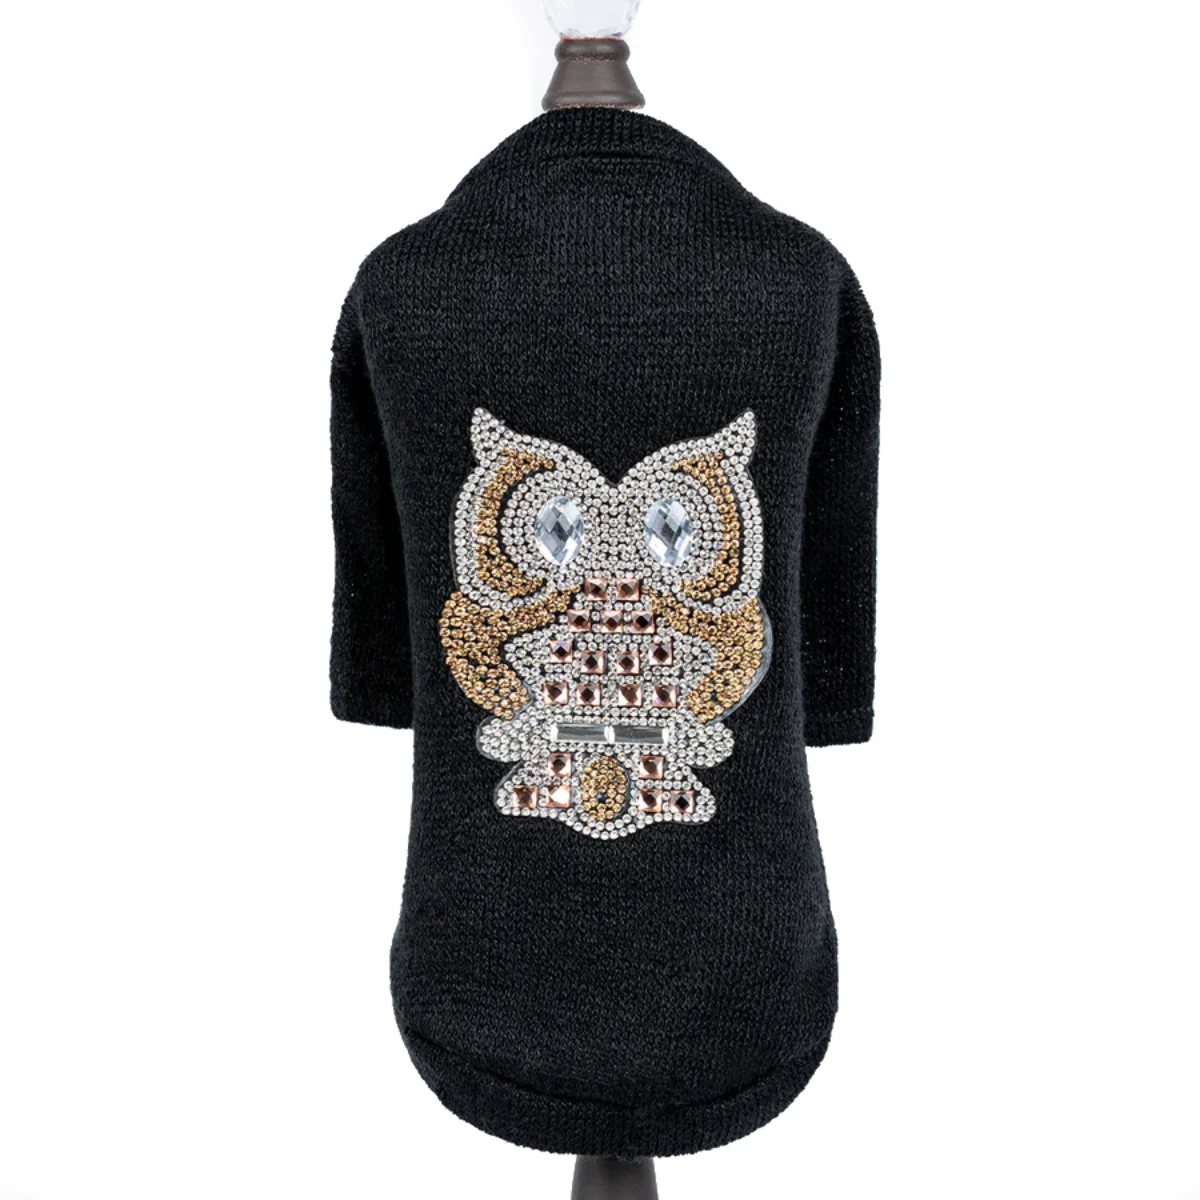 Hello Doggie Night Owl Dog Sweater - Black